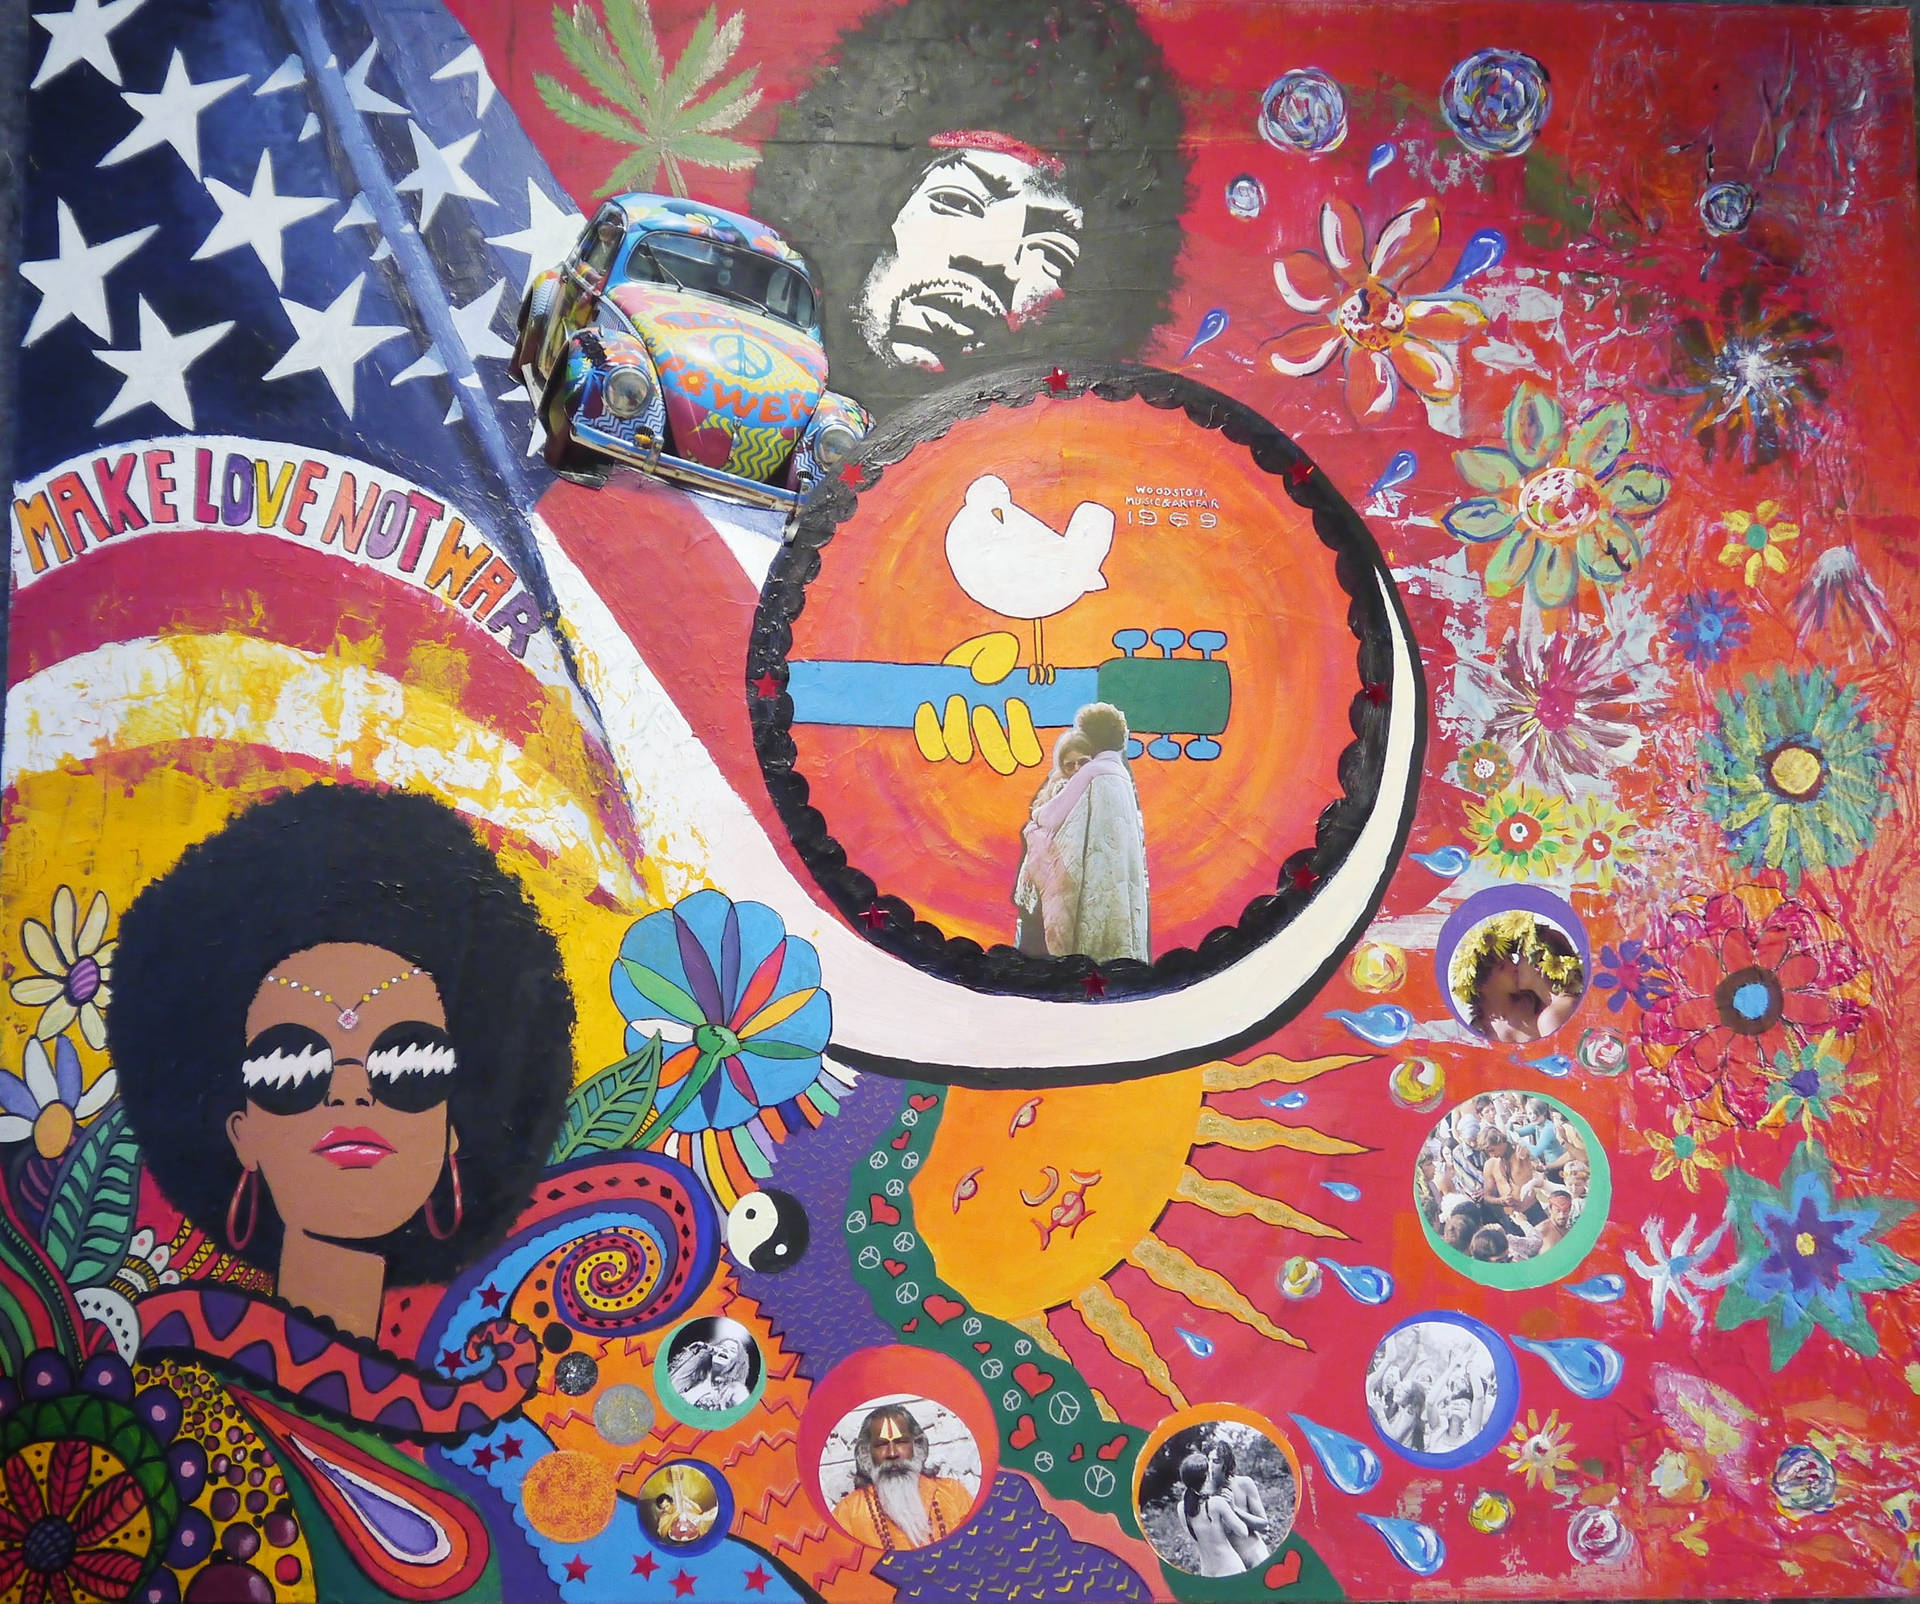 Woodstock Art Painting Wallpaper